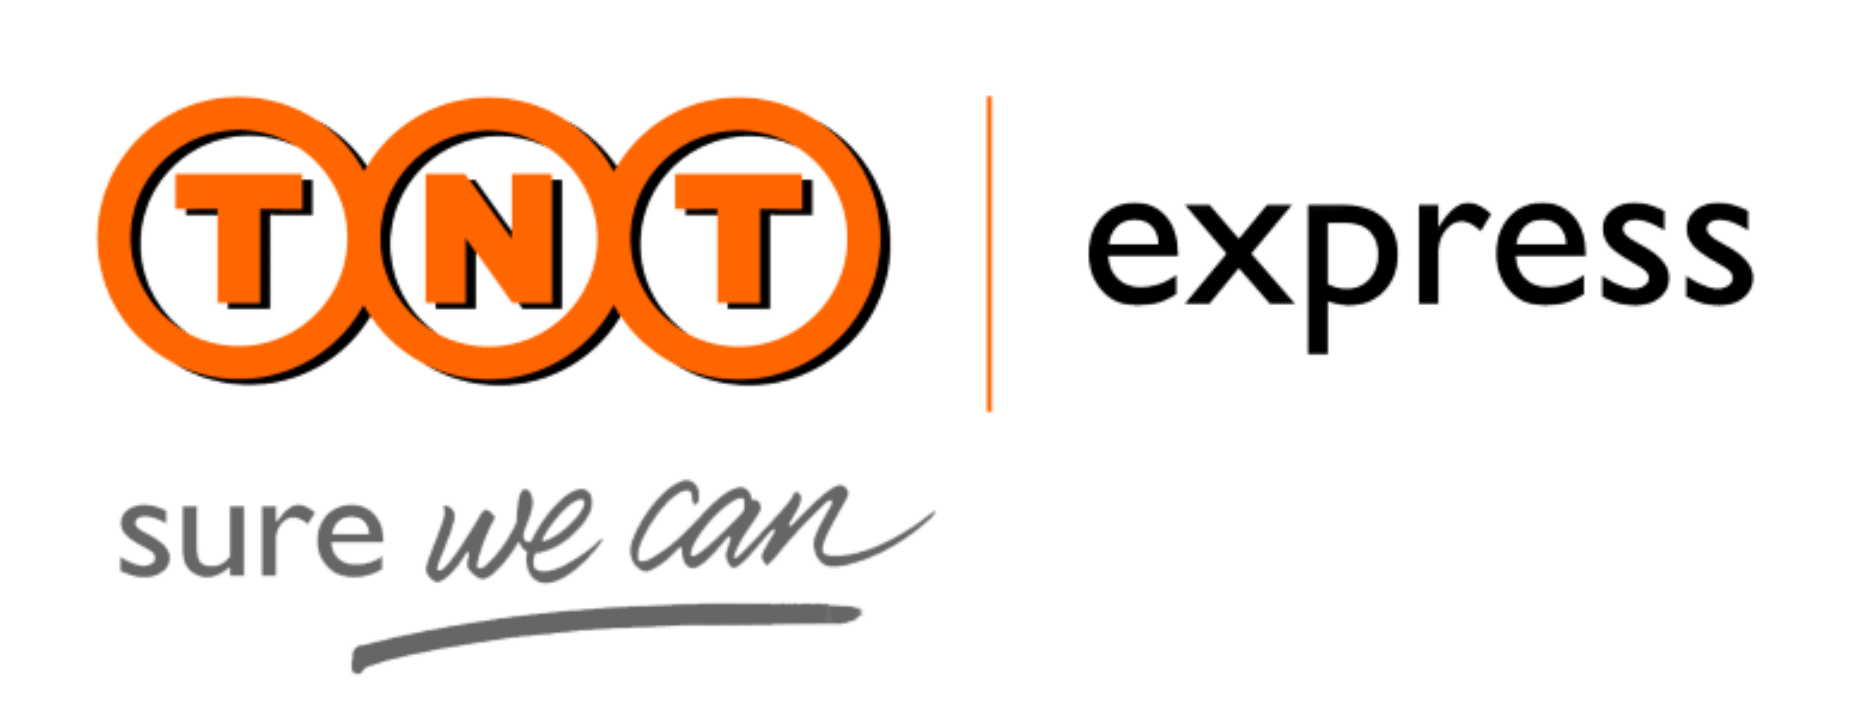 Tnt Express - Tnt Express, Transparent background PNG HD thumbnail